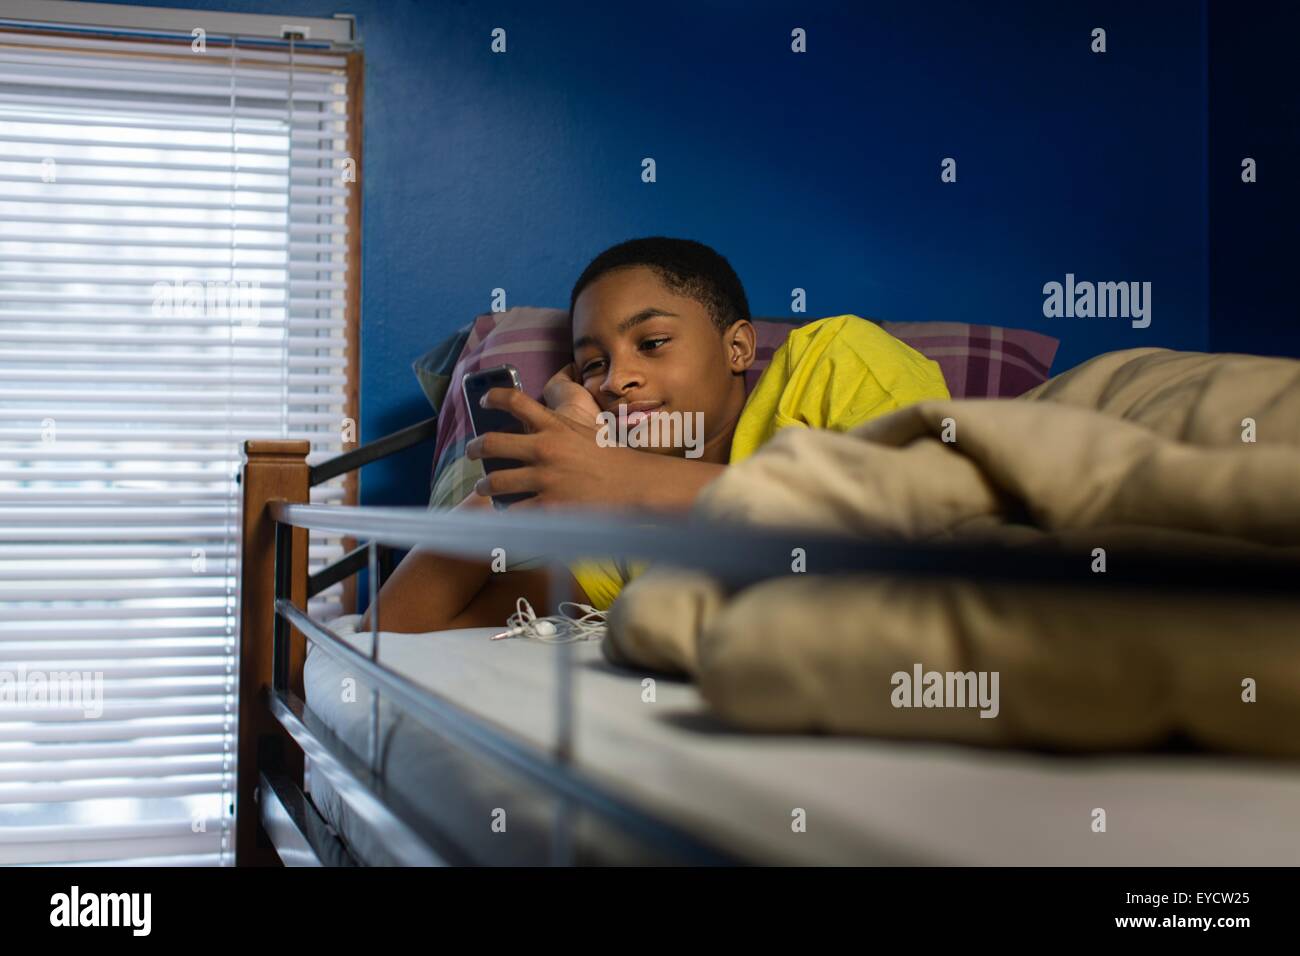 Teenage boy lying in bunkbed reading smartphone text Stock Photo